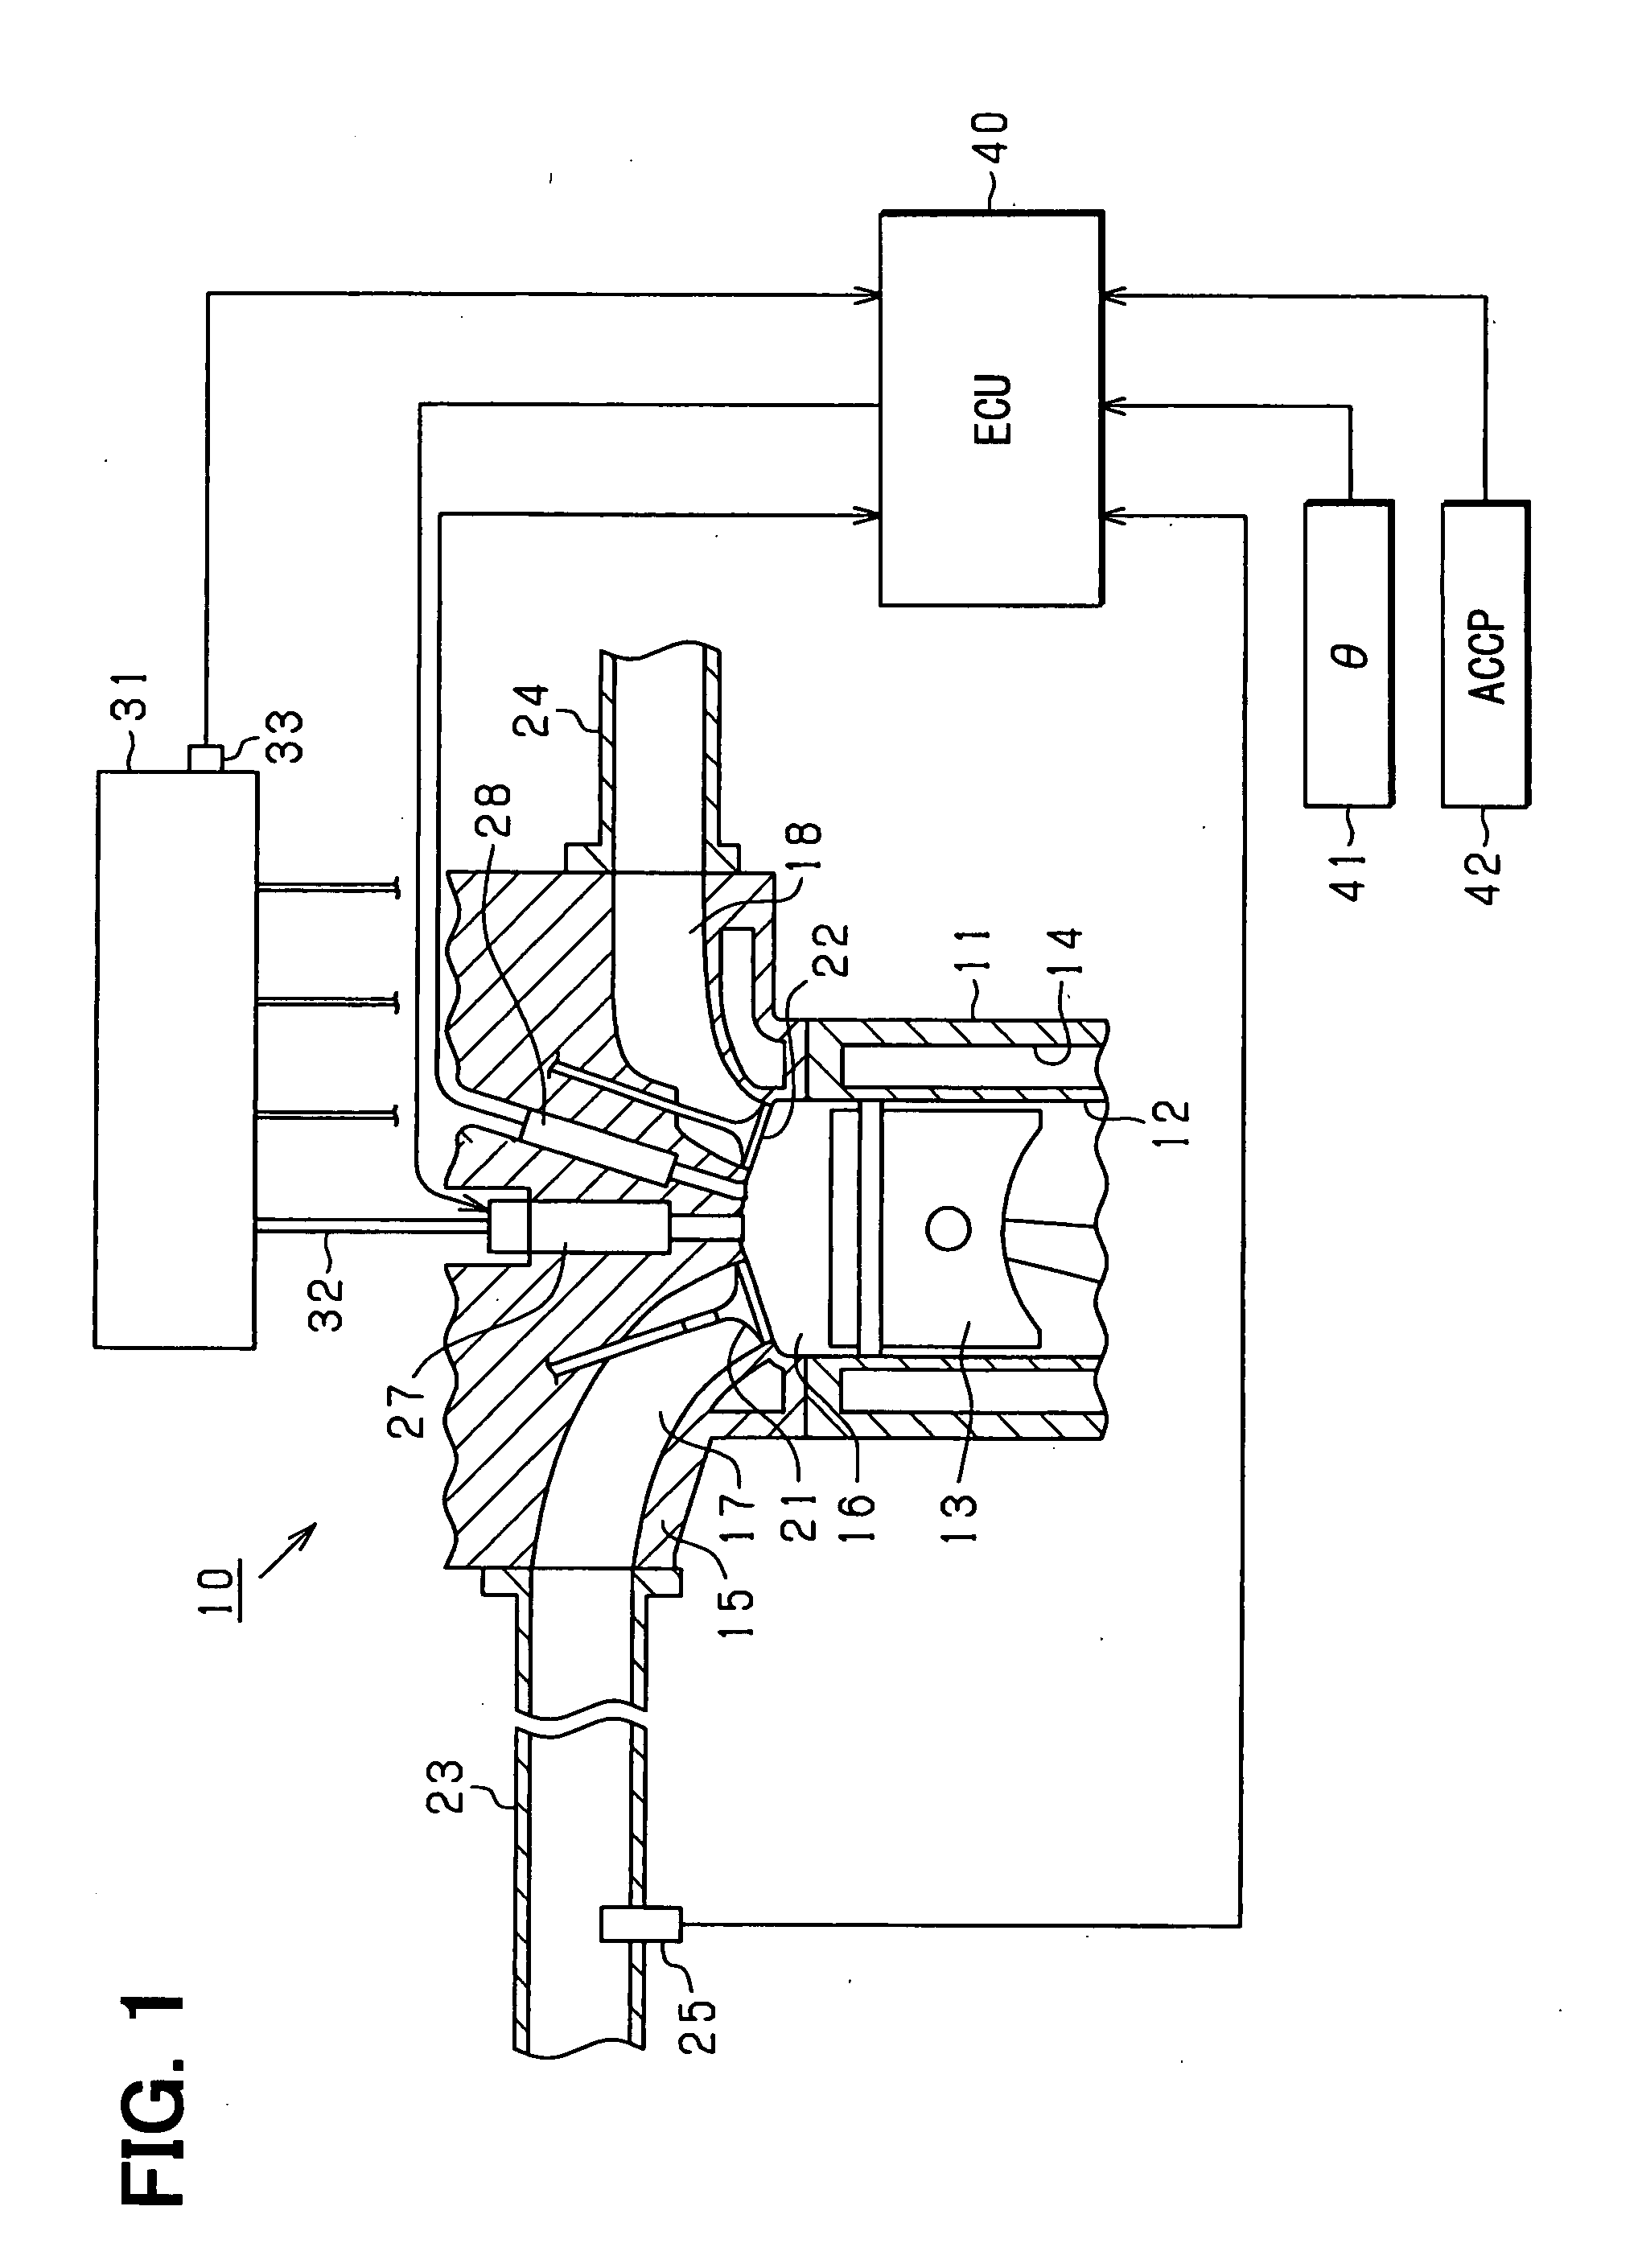 Abnormality determination device of cylinder pressure sensor